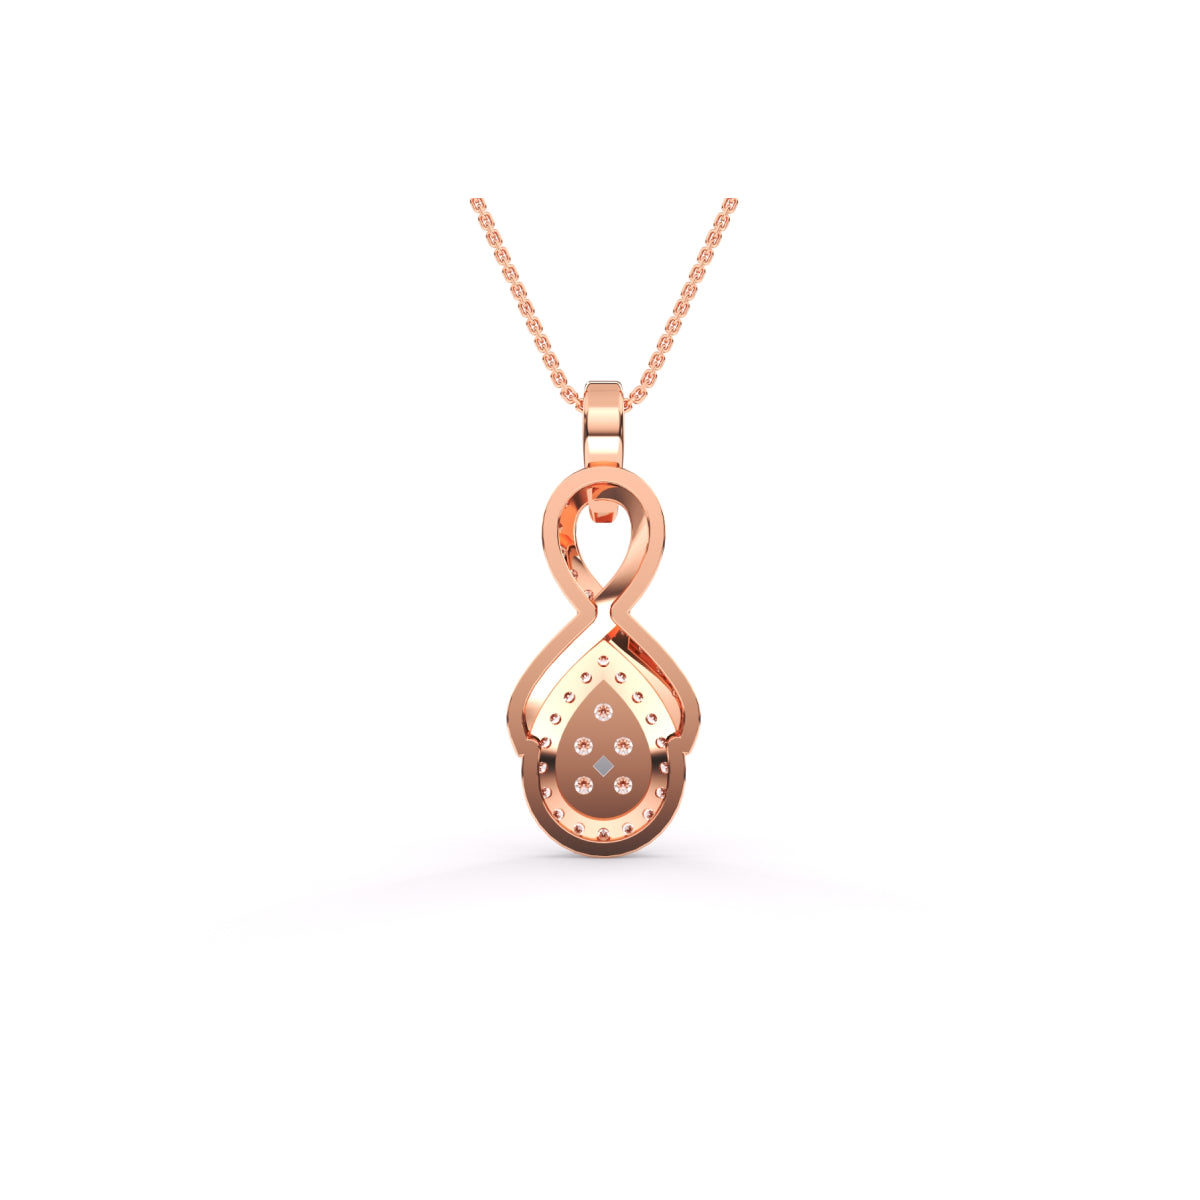 Kays chocolate heart shaped diamond necklace | Heart shaped diamond necklace,  Diamond necklace, Chocolate hearts